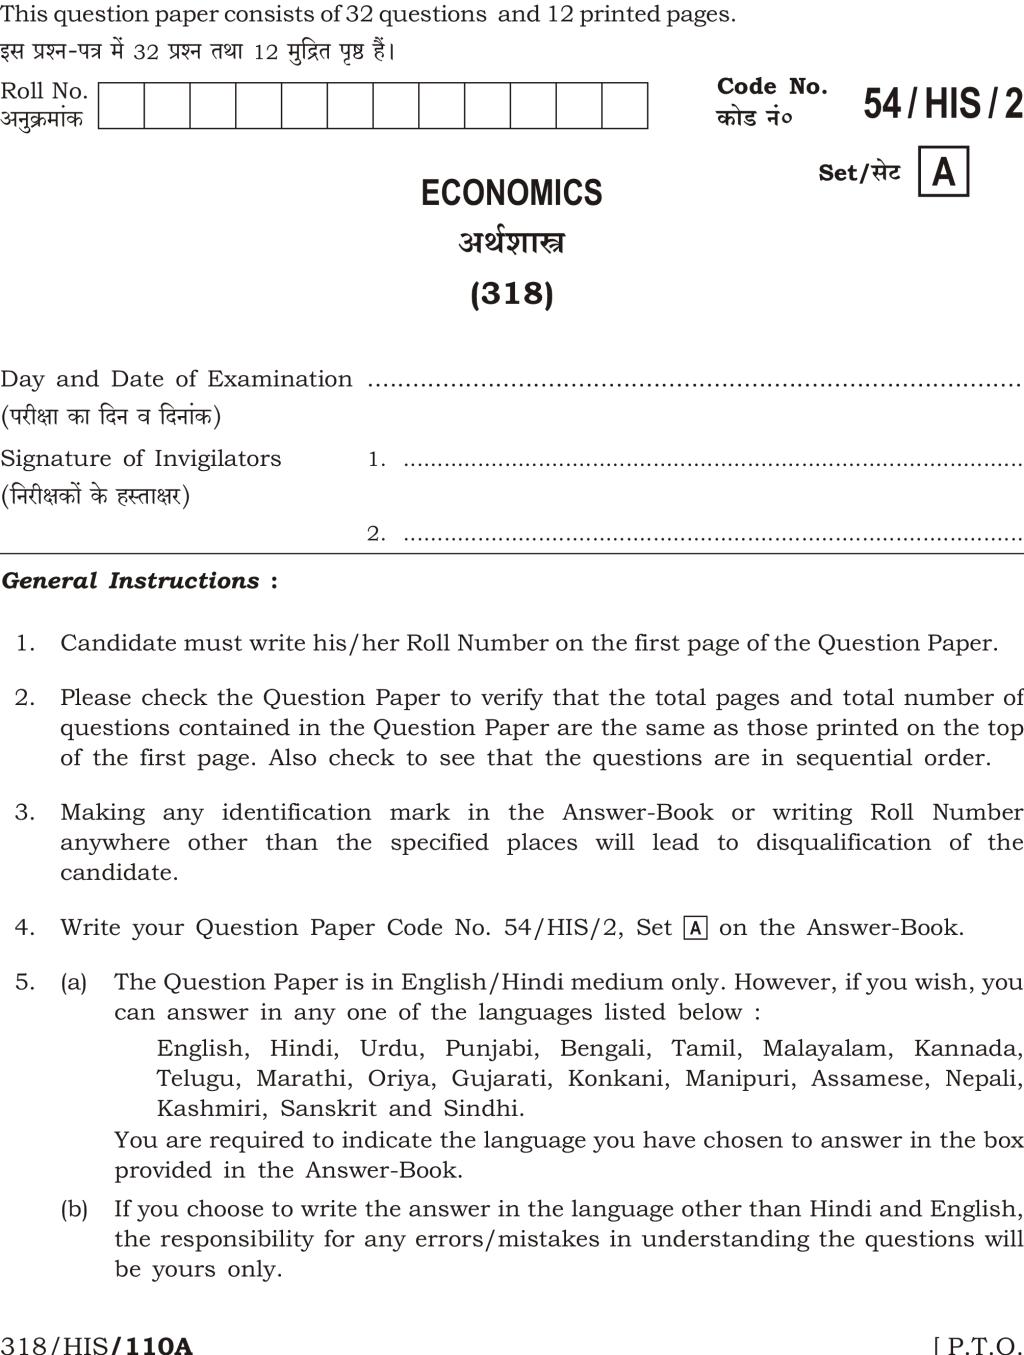 nios economics class 12 assignment